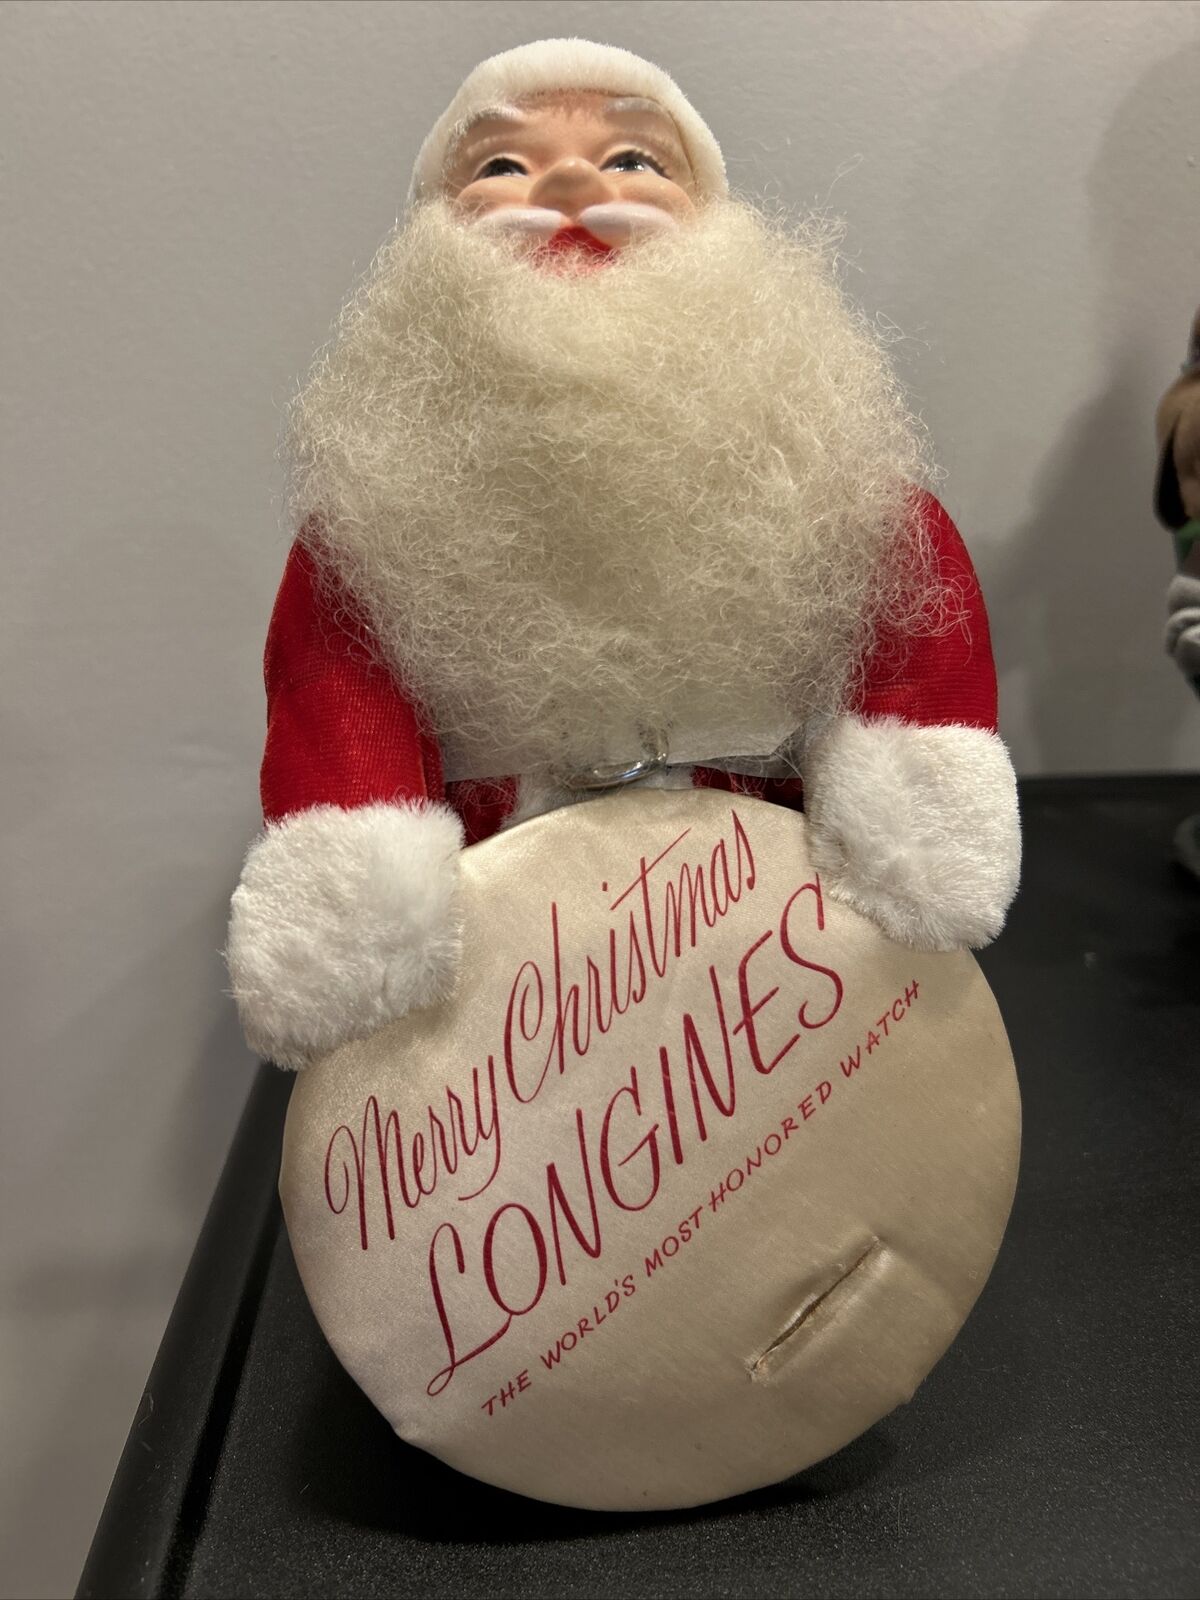 Longines Wittnauer Santa Display Vintage Rare Merry Christmas Worlds Watch